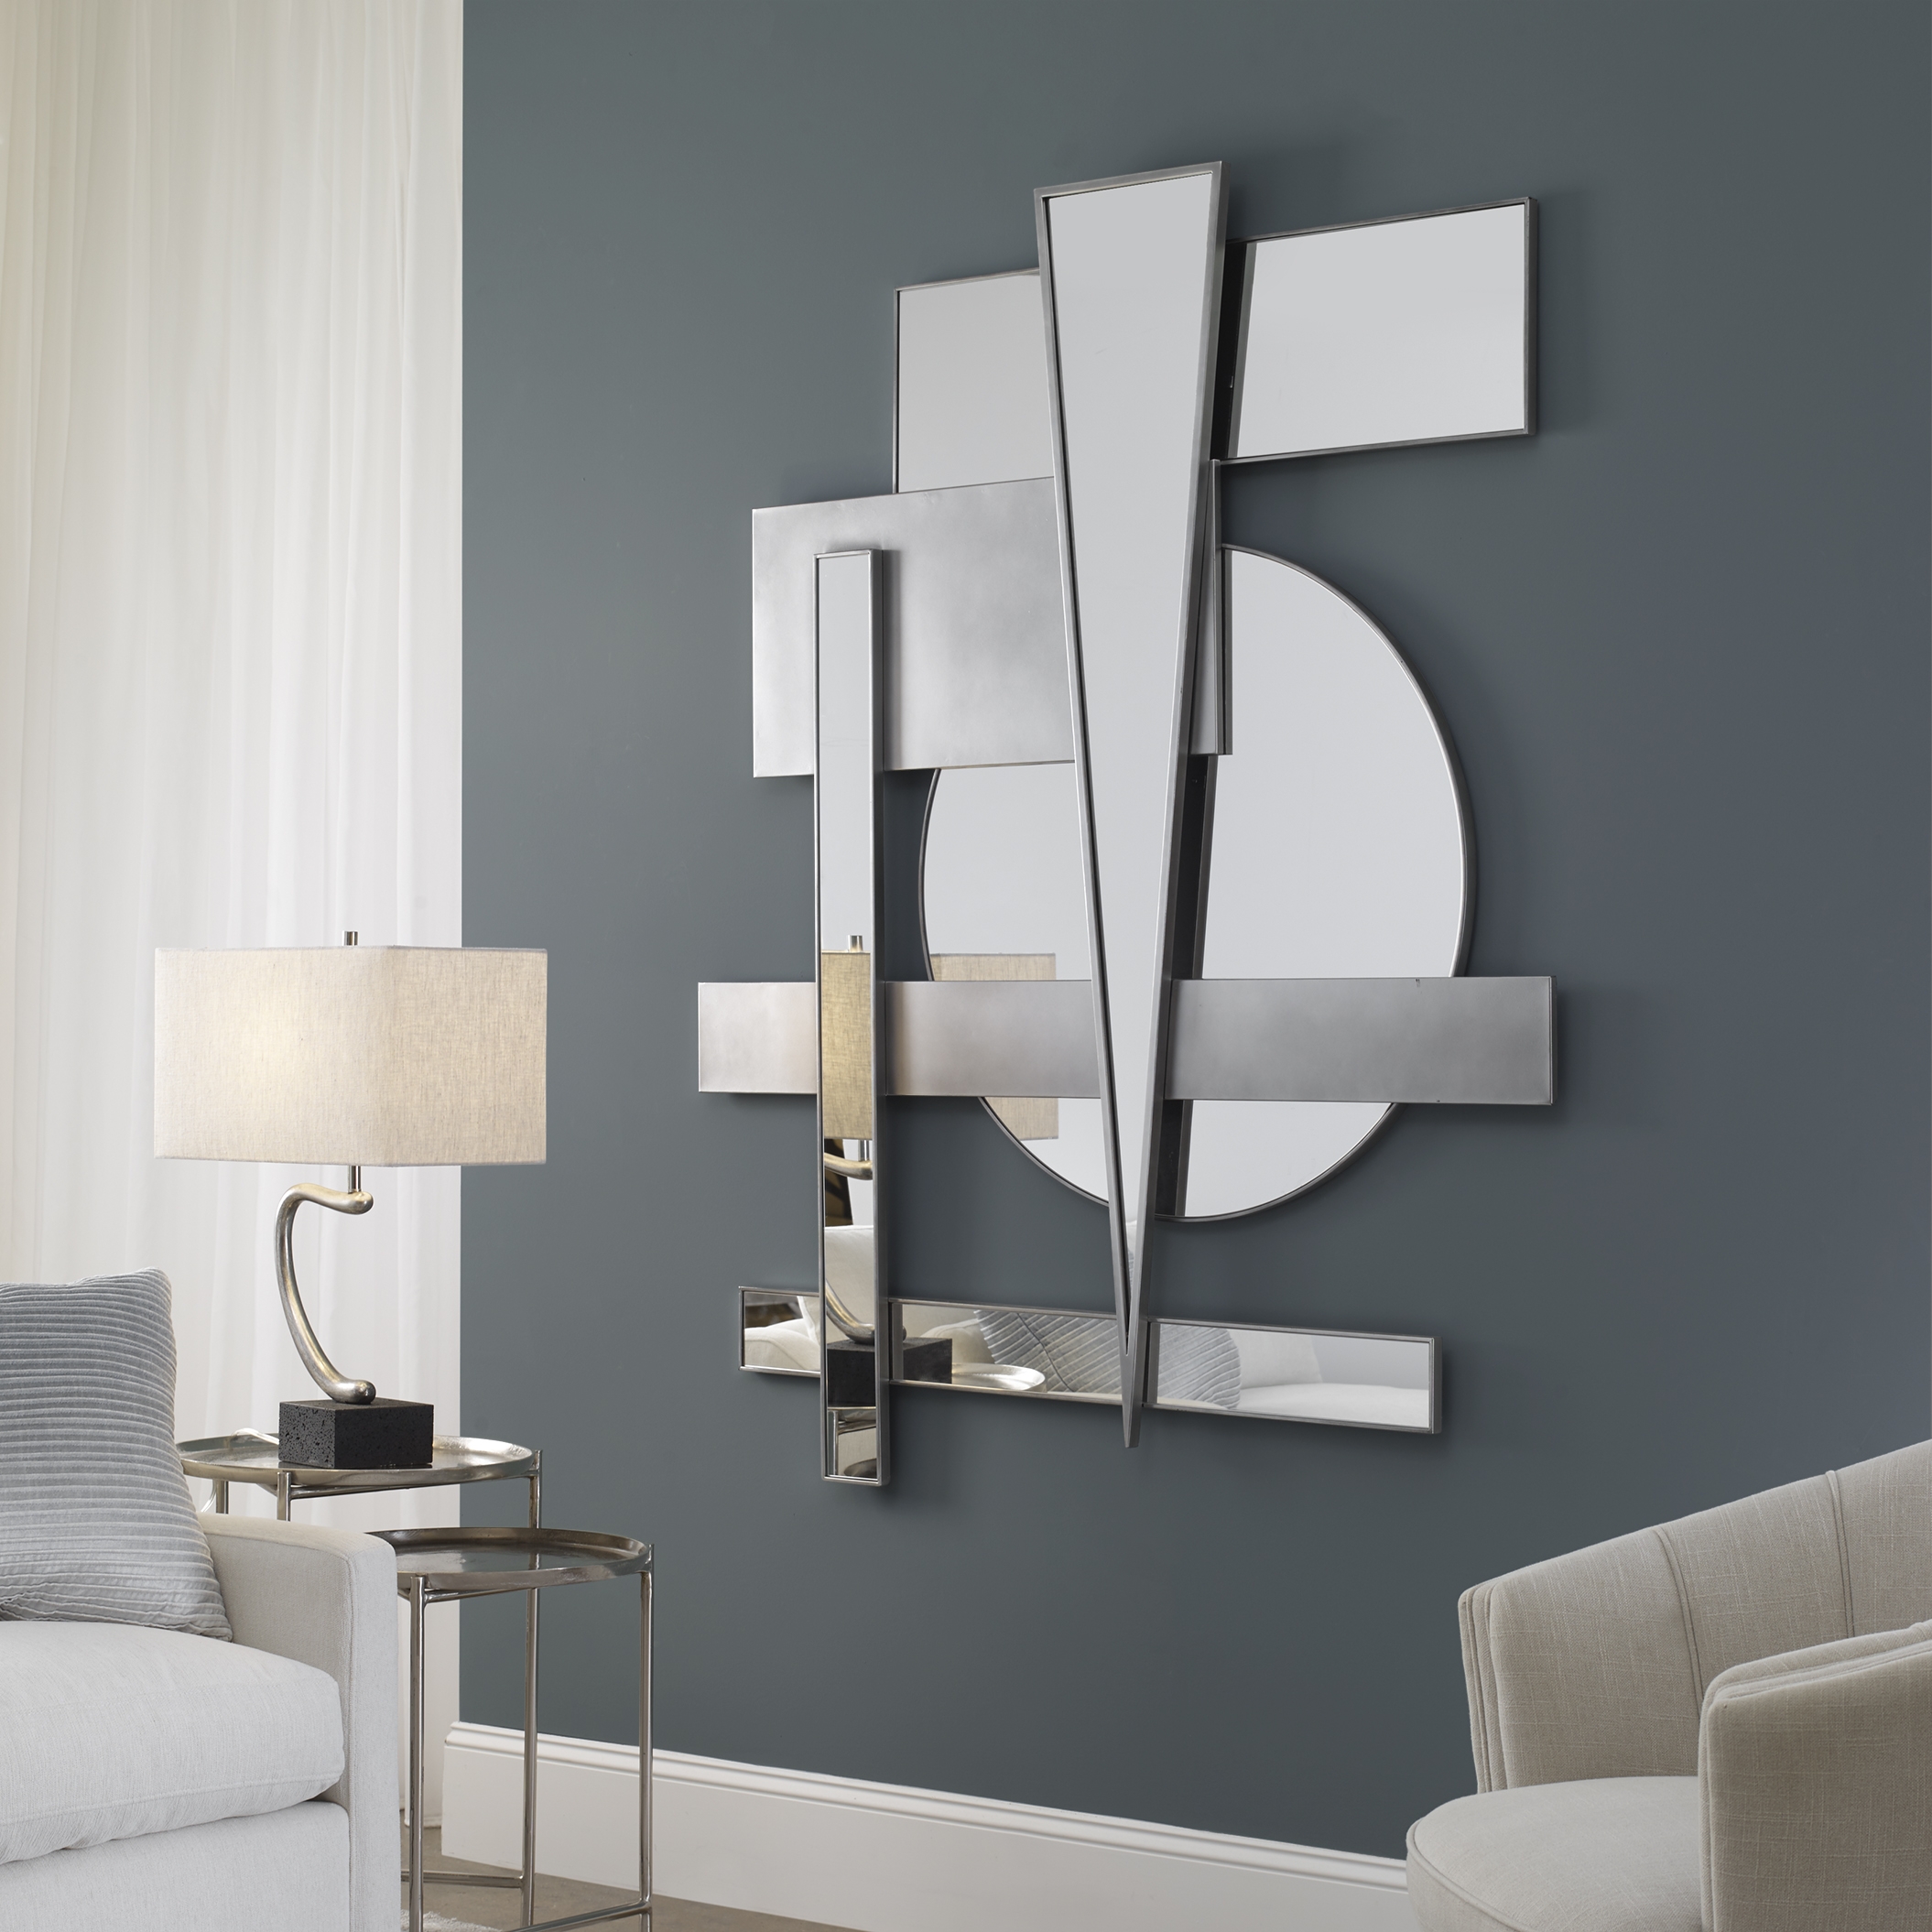 Wedge Mirrored Modern Wall Decor - Image 1